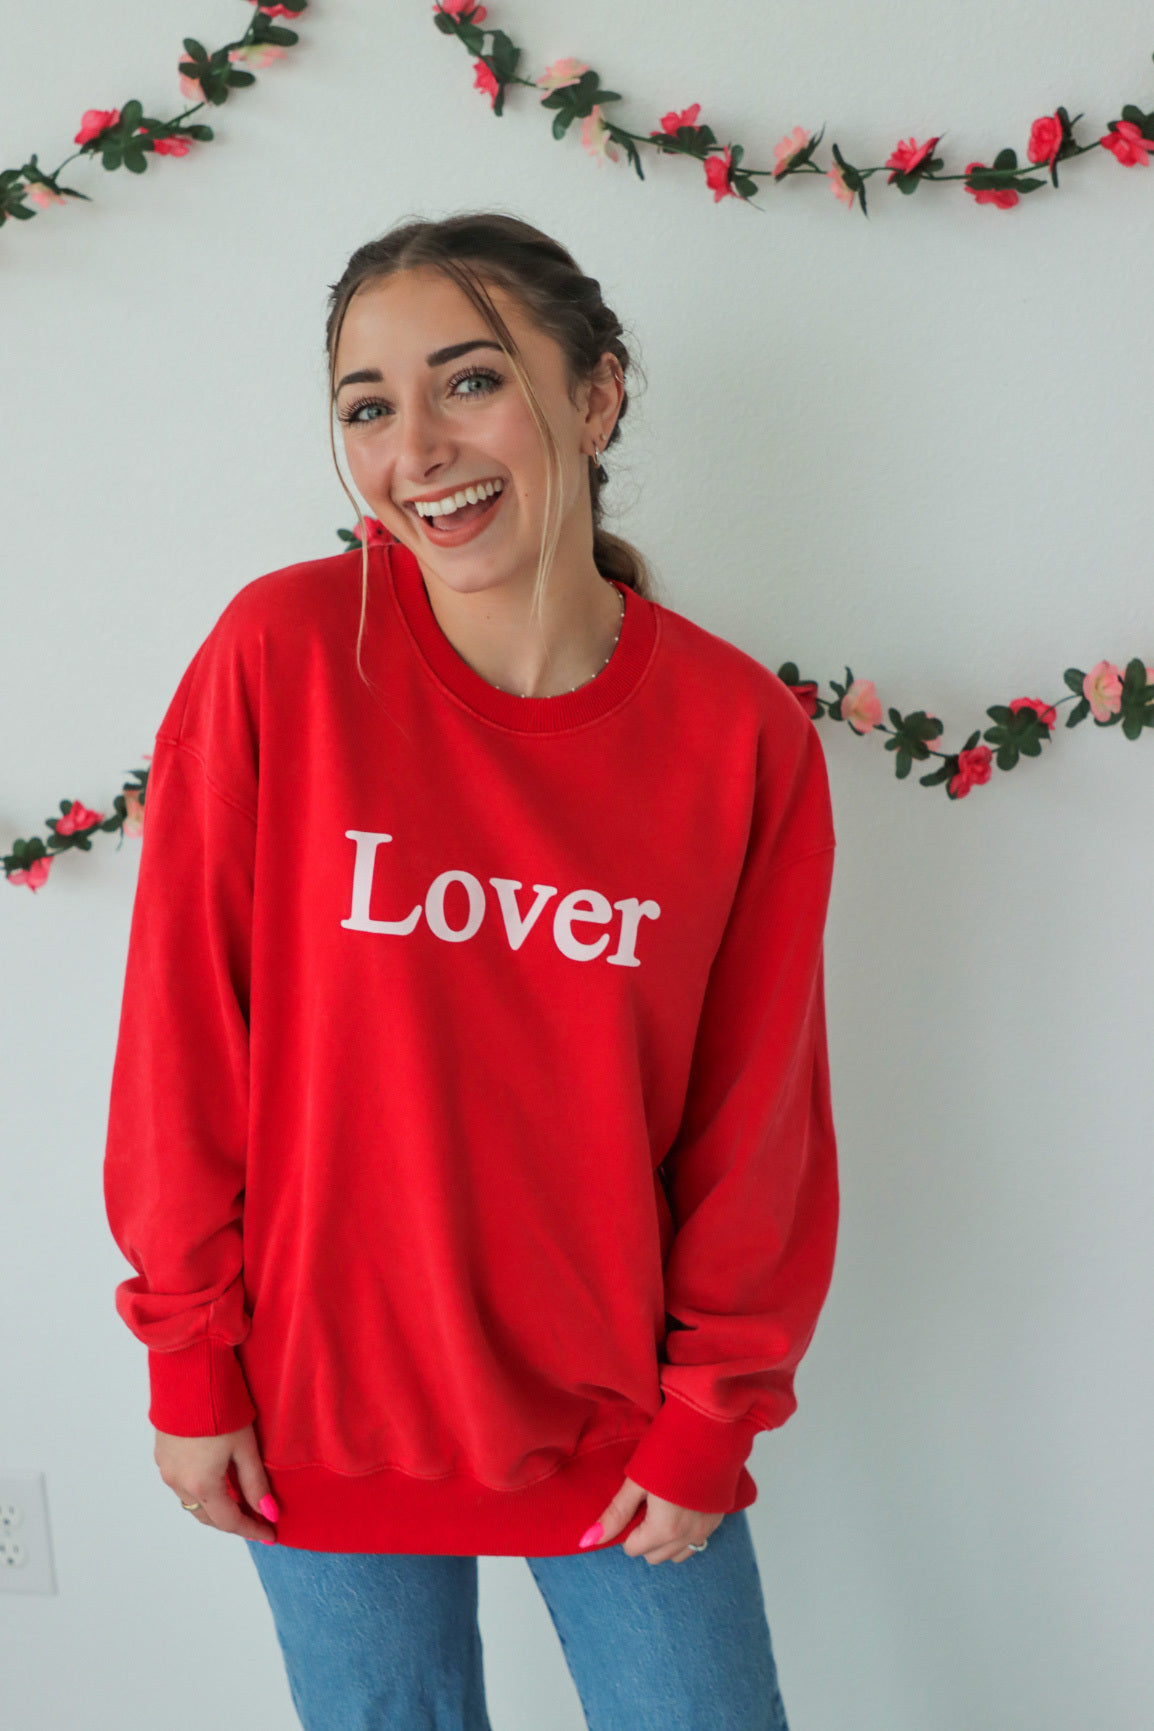 girl wearing red "Lover" crewneck sweatshirt